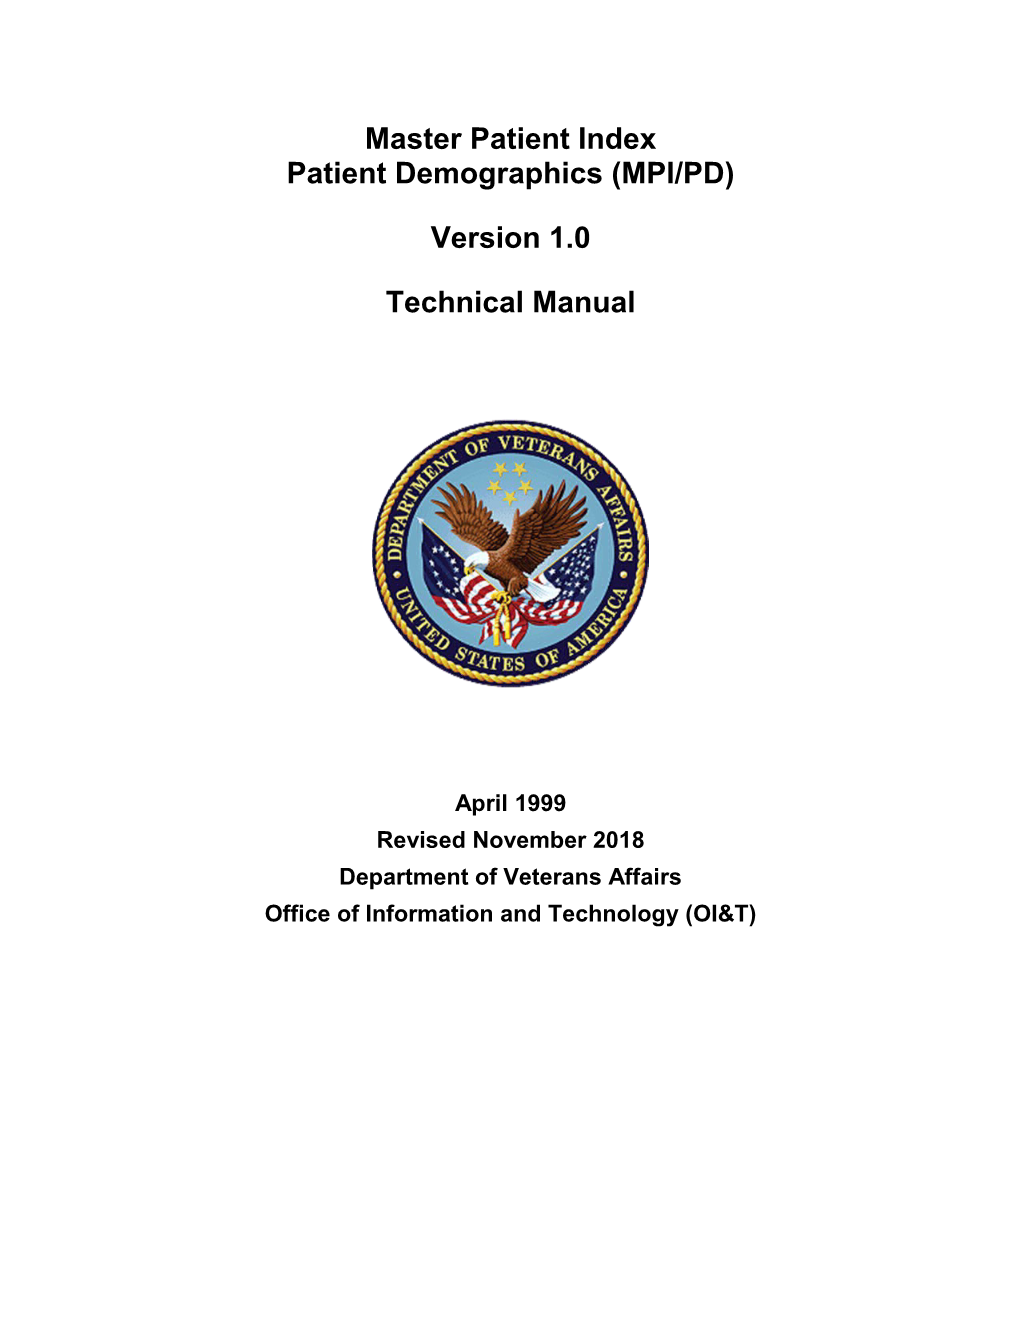 Master Patient Index/Patient Demographics Technical Manual